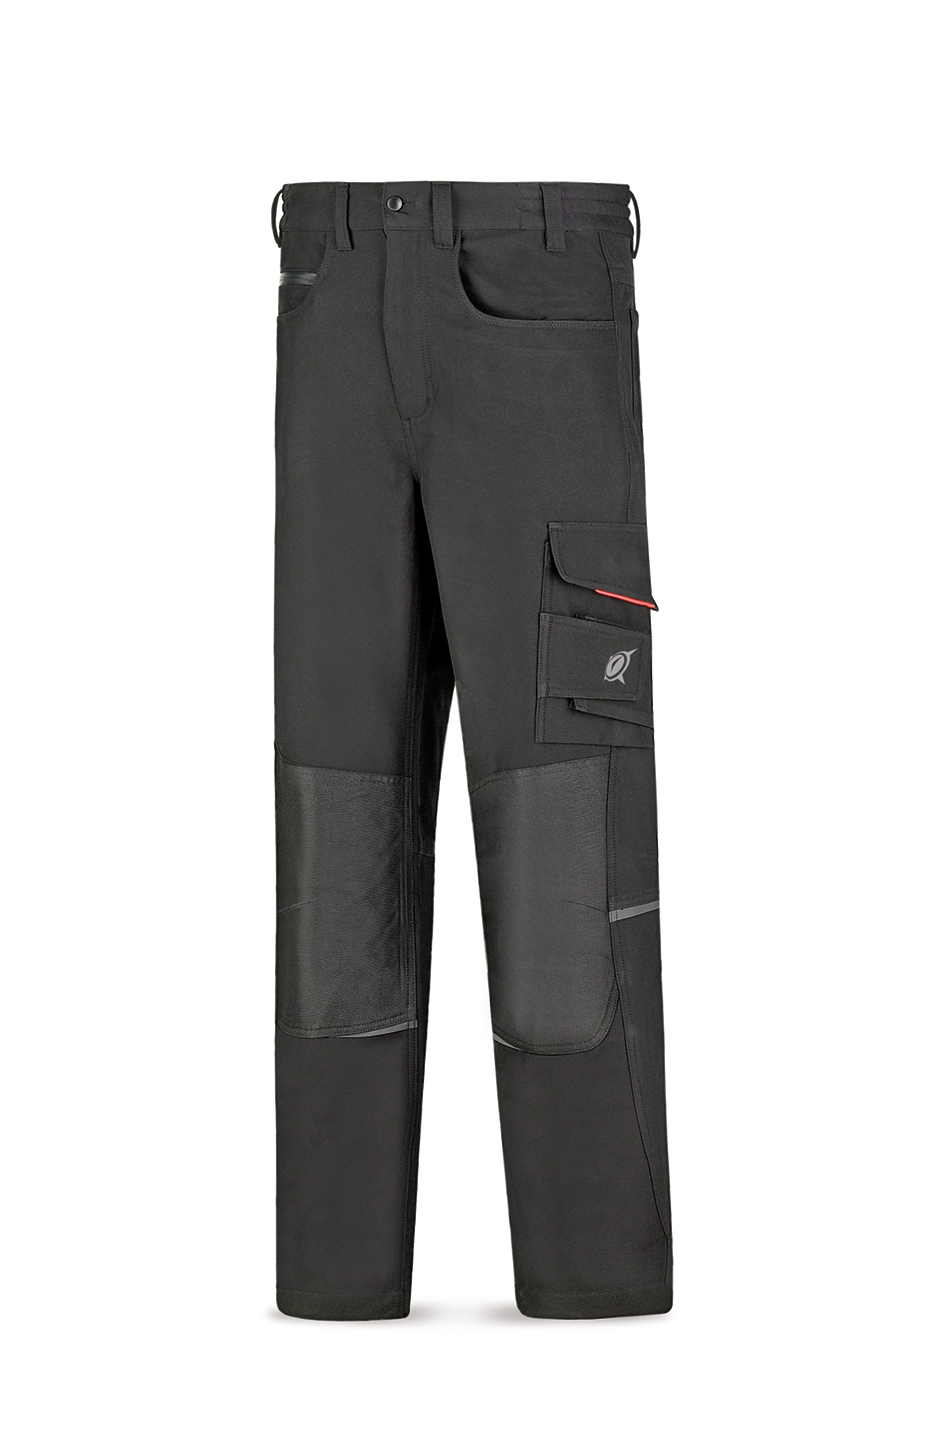 288-PAS3 Abrigo y lluvia Pantalones Pantalón Softshell triple lámina modelo NJORD. Color Negro.